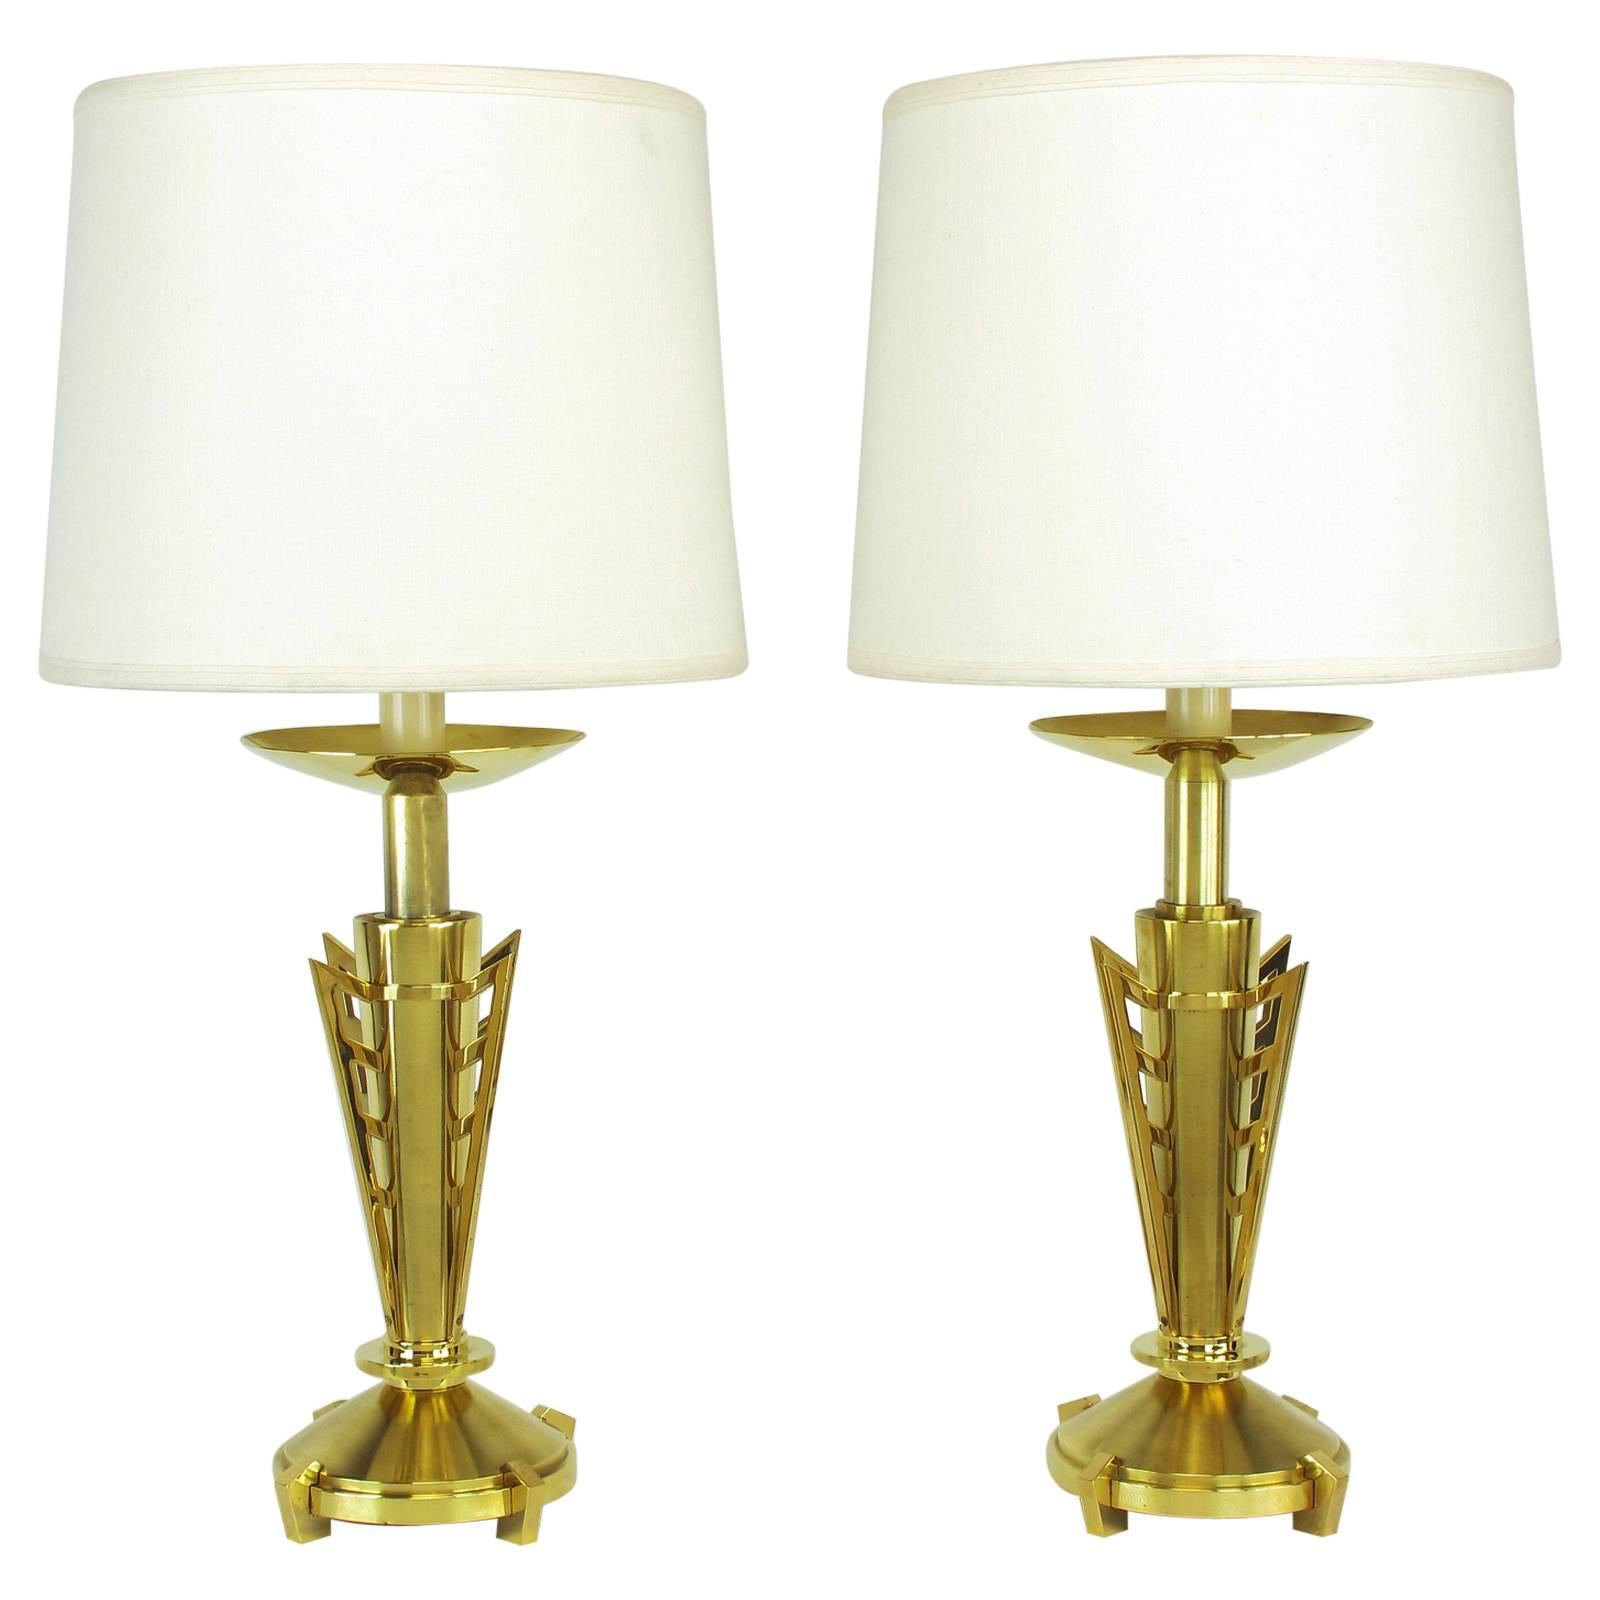 Pair of Custom Art Deco Inspired Brass Table Lamps